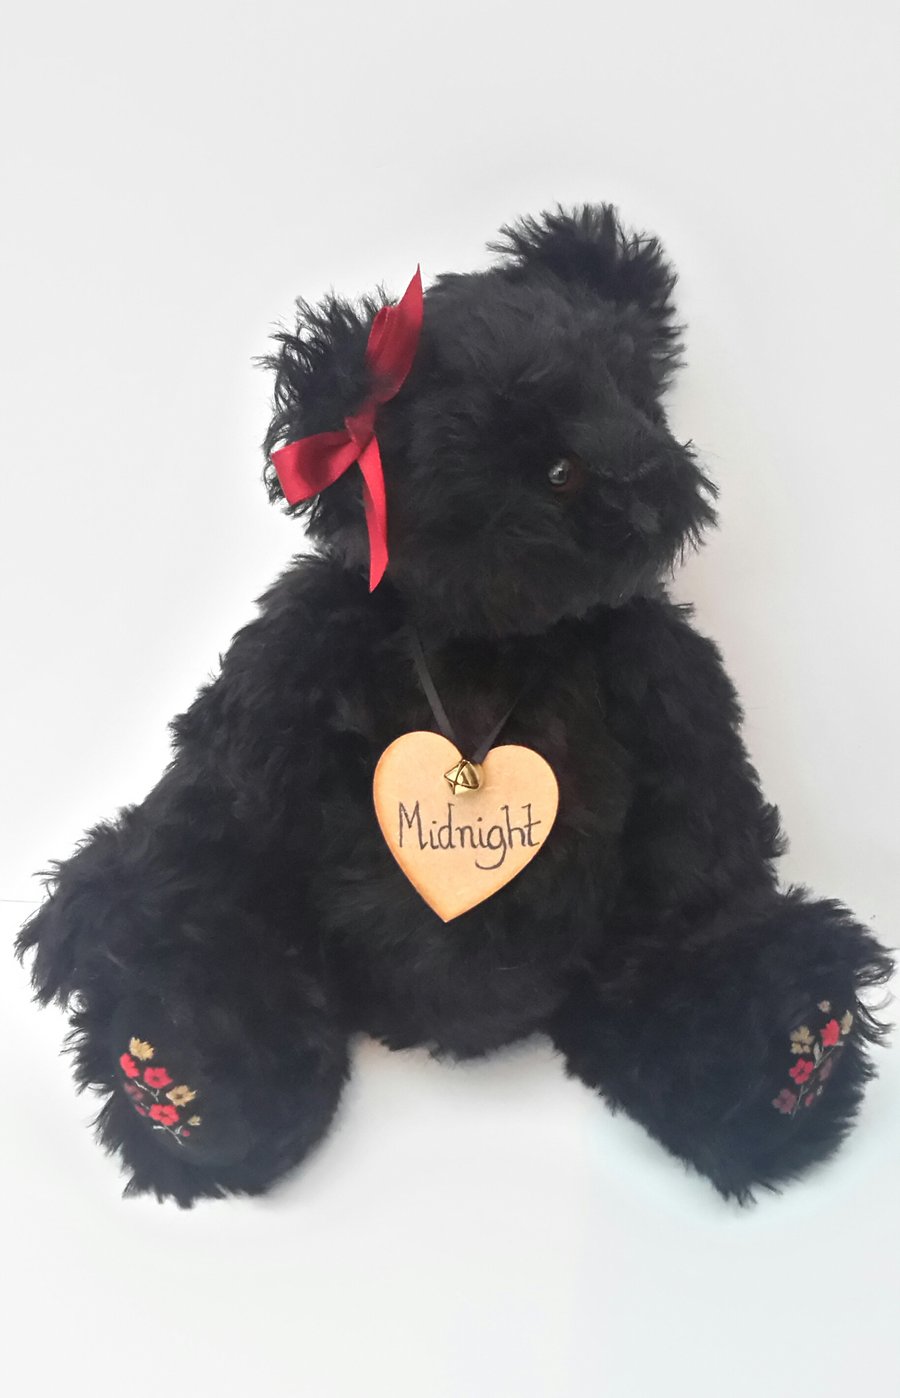 Midnight, Black Mohair Bear with hand embroidery, Collectable Artist Bear, Teddy